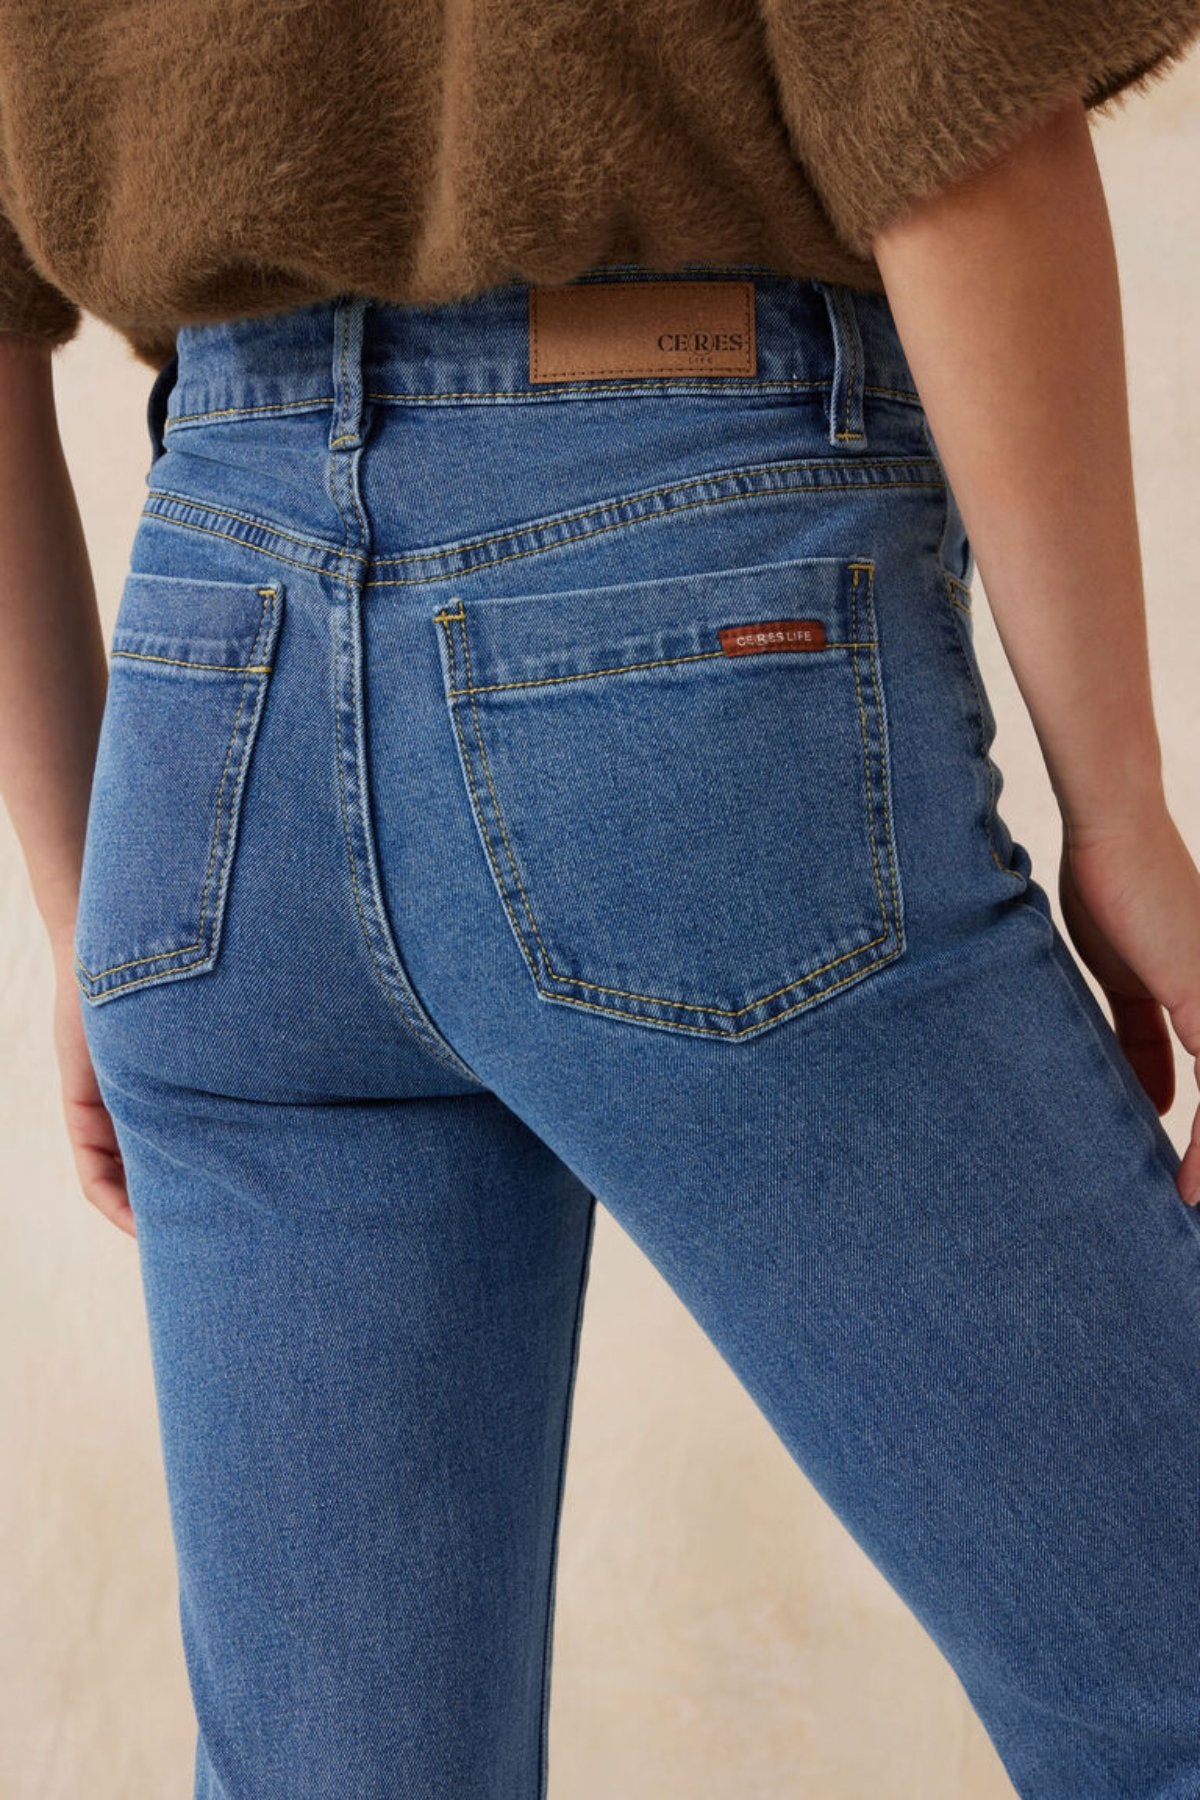 Bootleg Jean - Indigo Comfort Stretch Denim - Sare StoreCeres LifeJeans